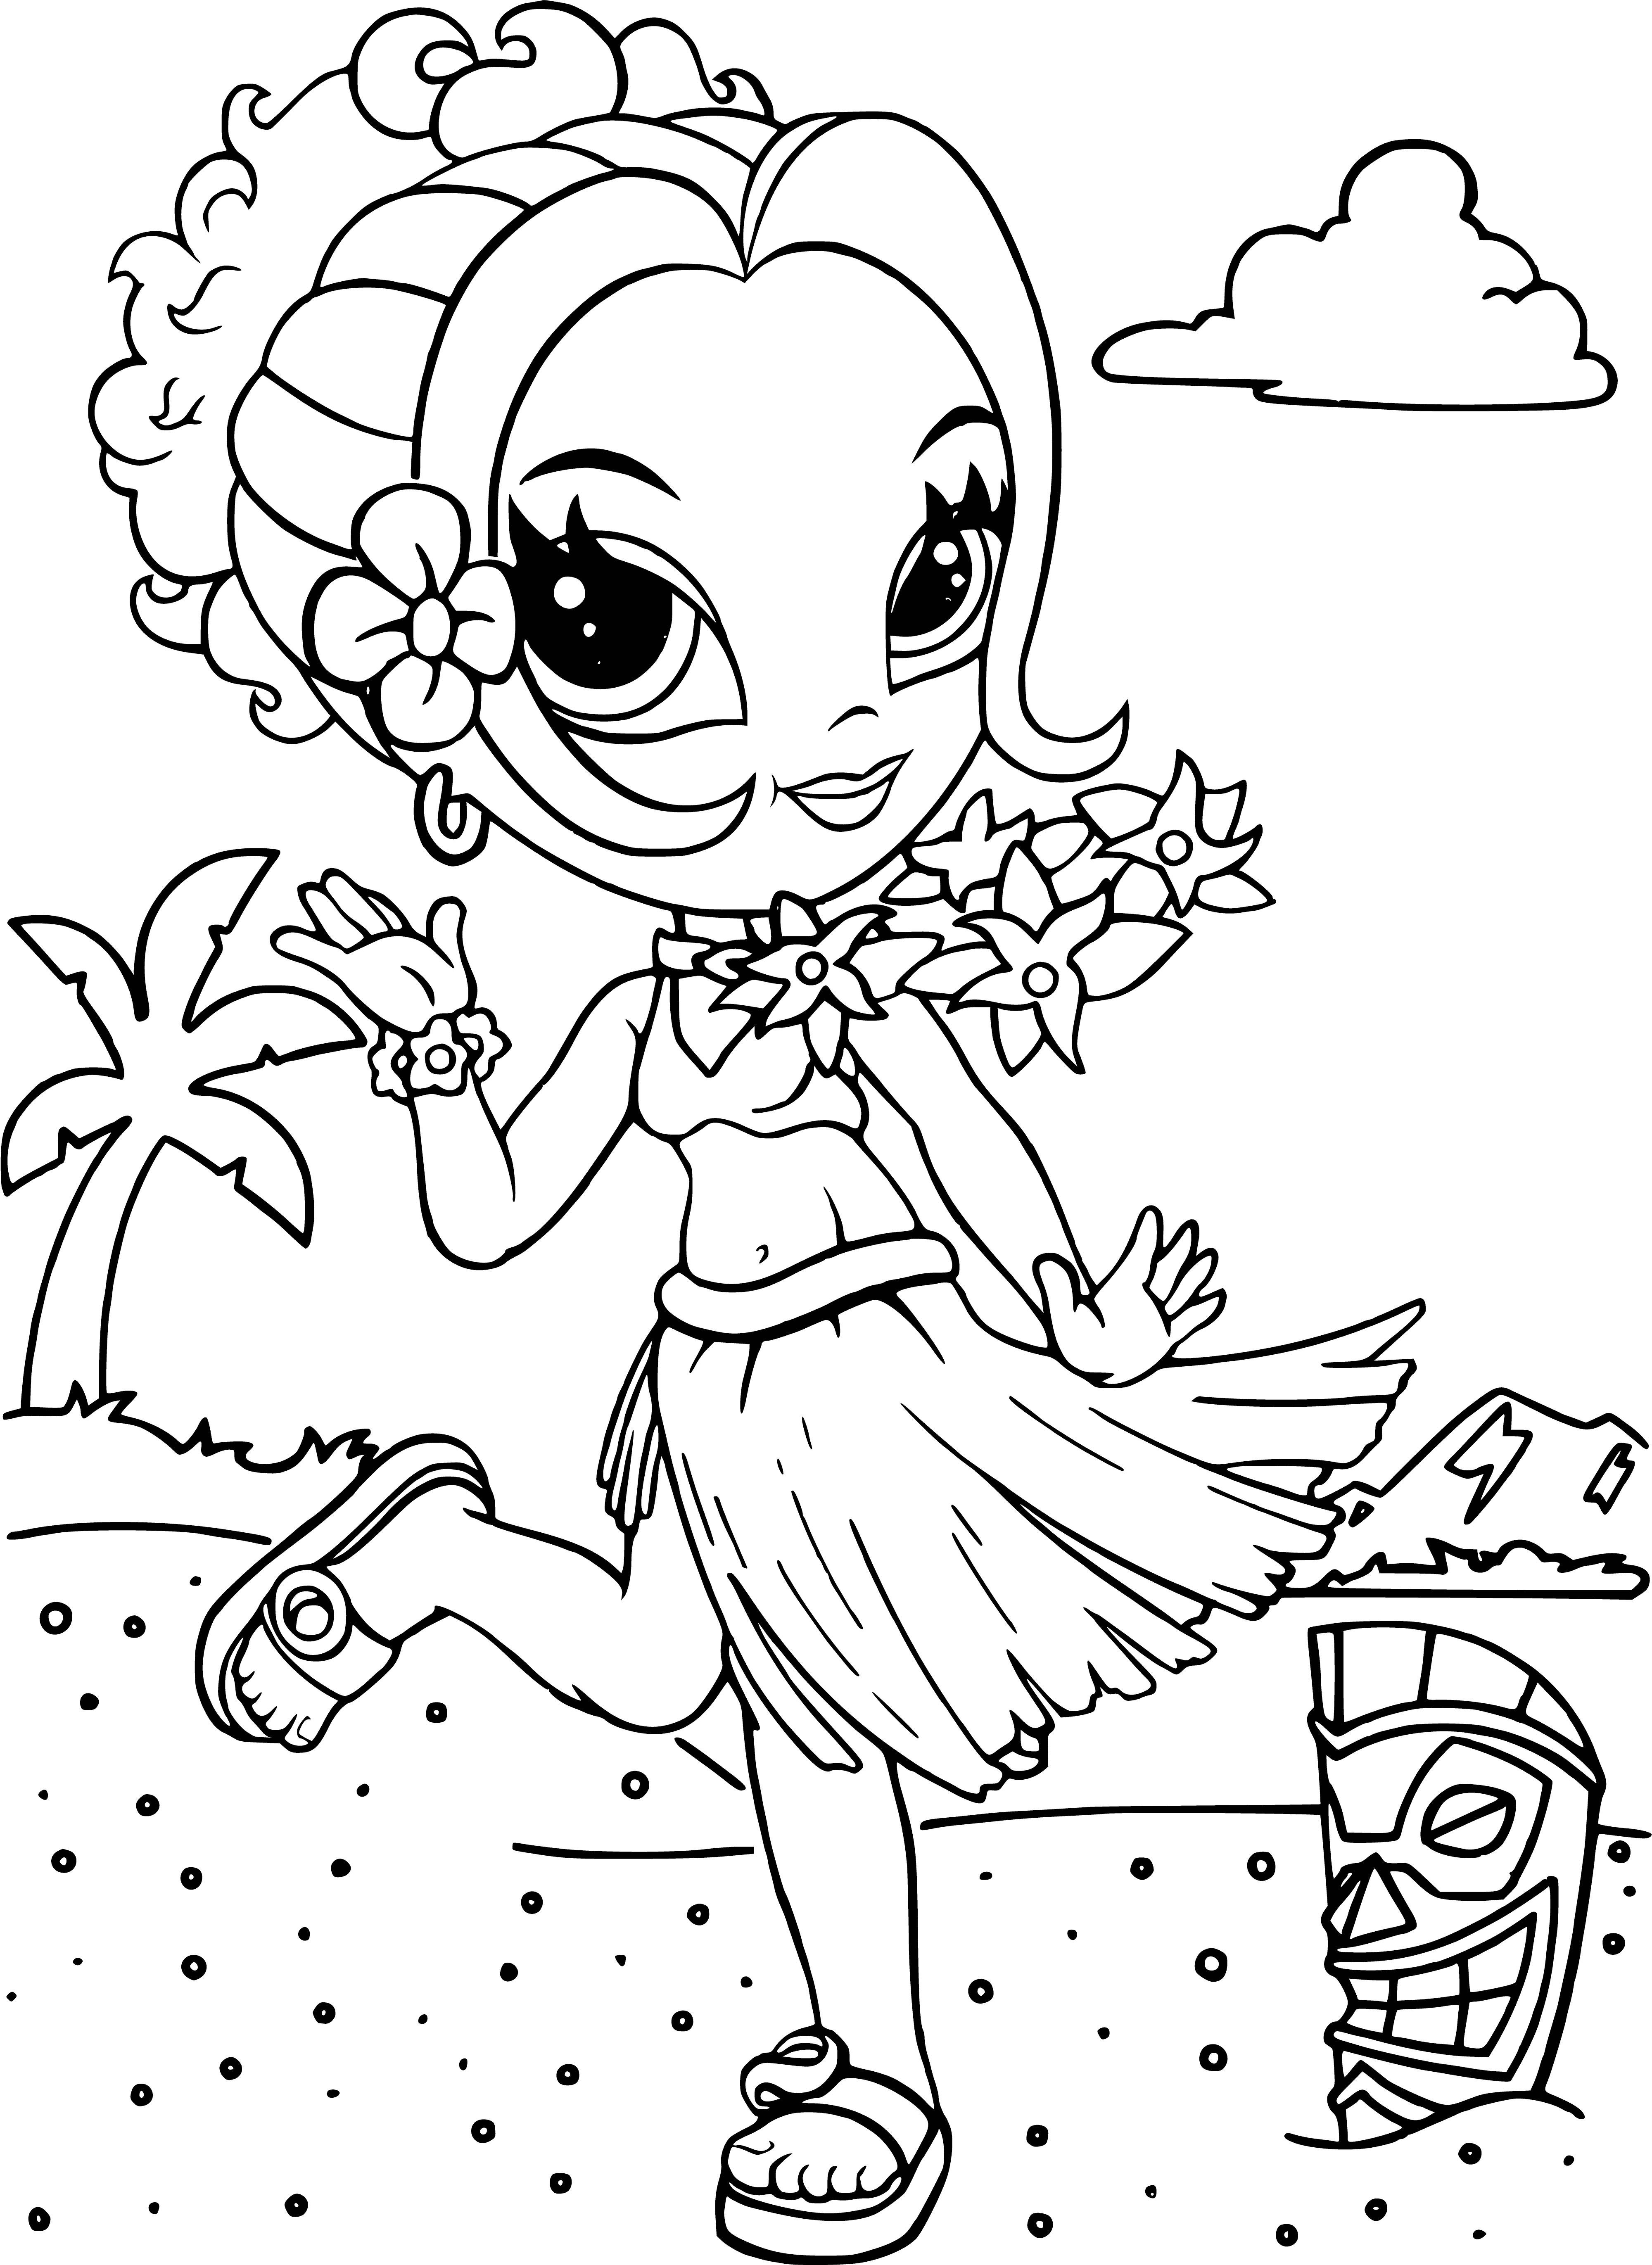 Glamorous girl coloring page